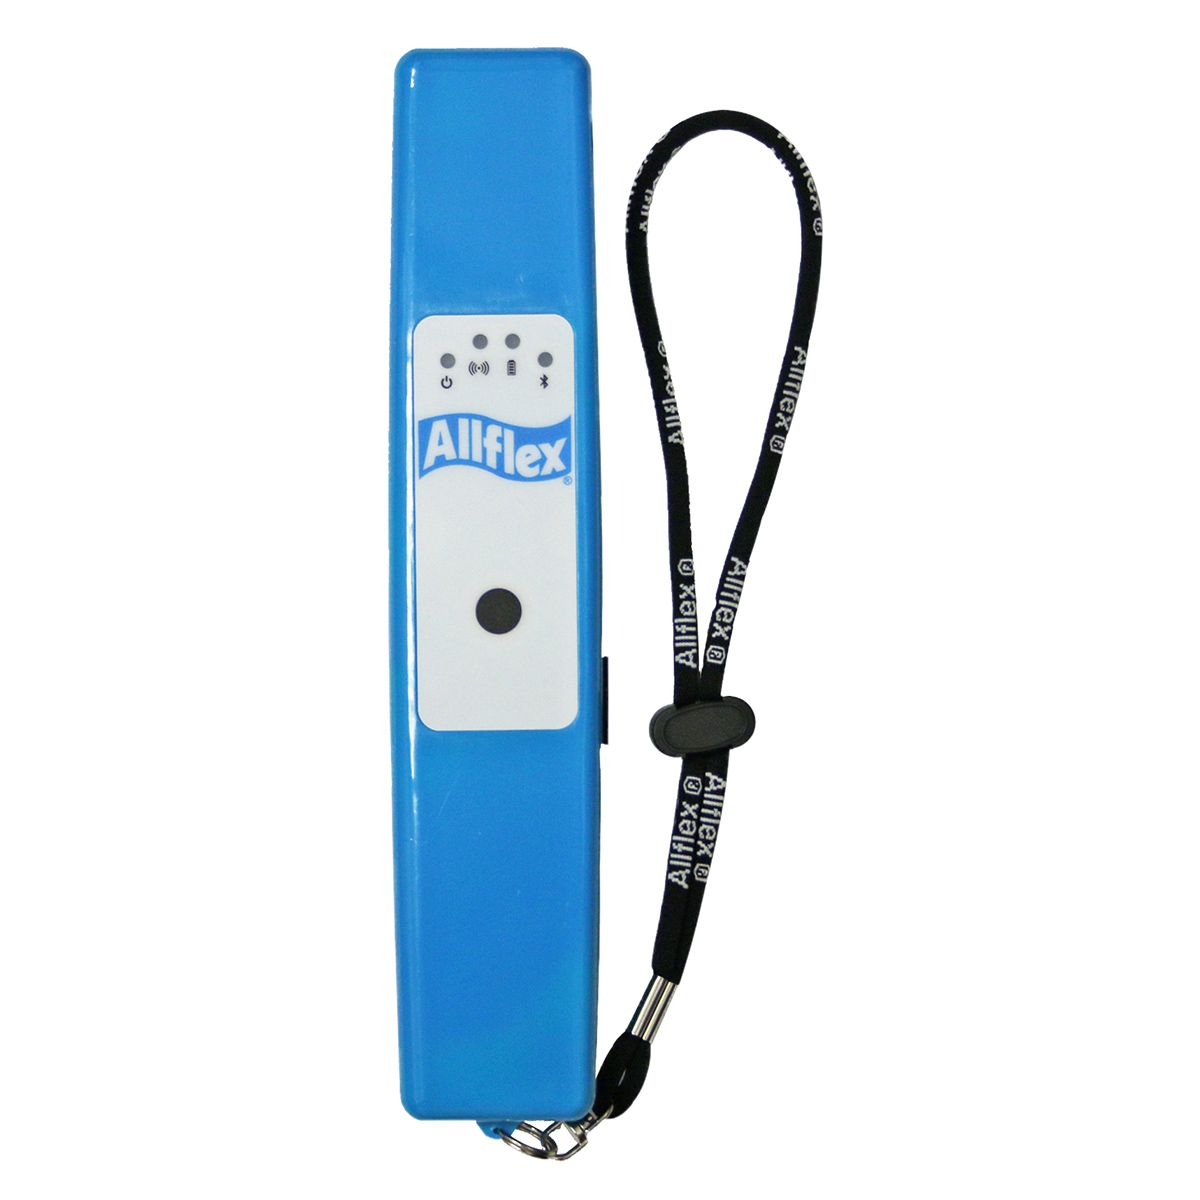 Allflex Rs250-3-45s 930040 Animal Livestock ID RFID Chip Tag Stick Reader for sale online 